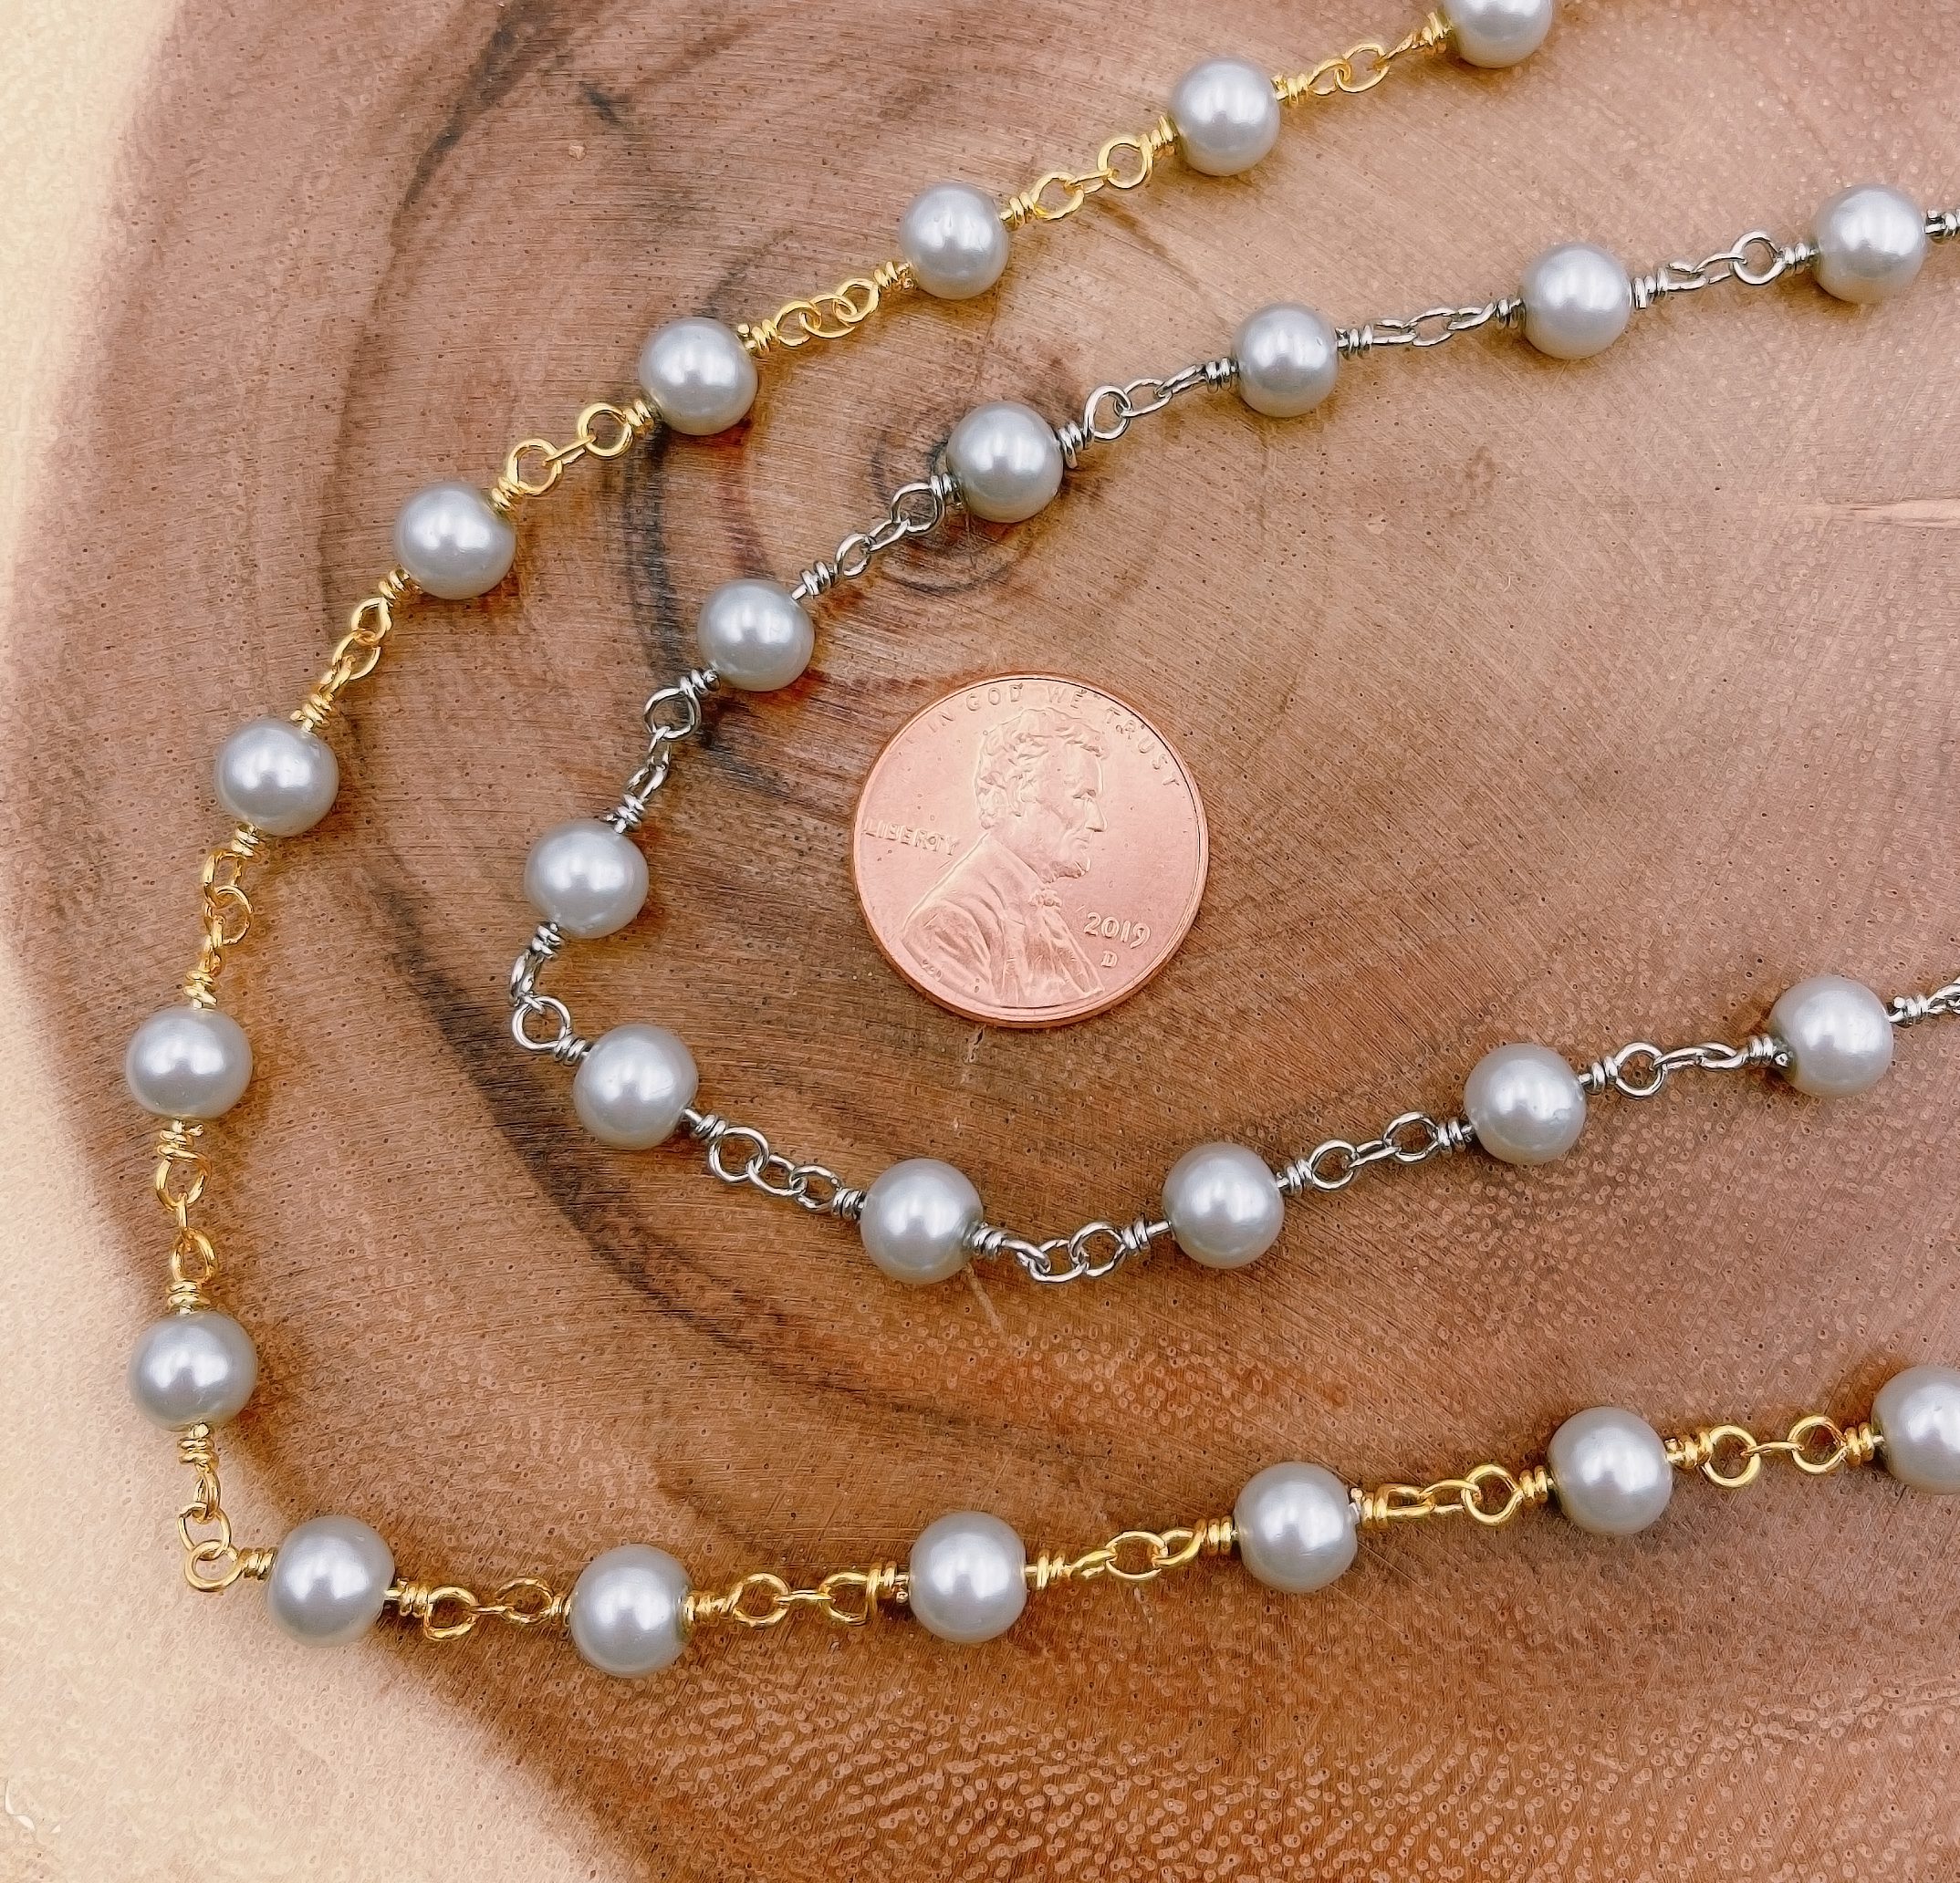 14k Gold Filled Pearl Chain Grey Pearl Rosary Chain Bulk Chain